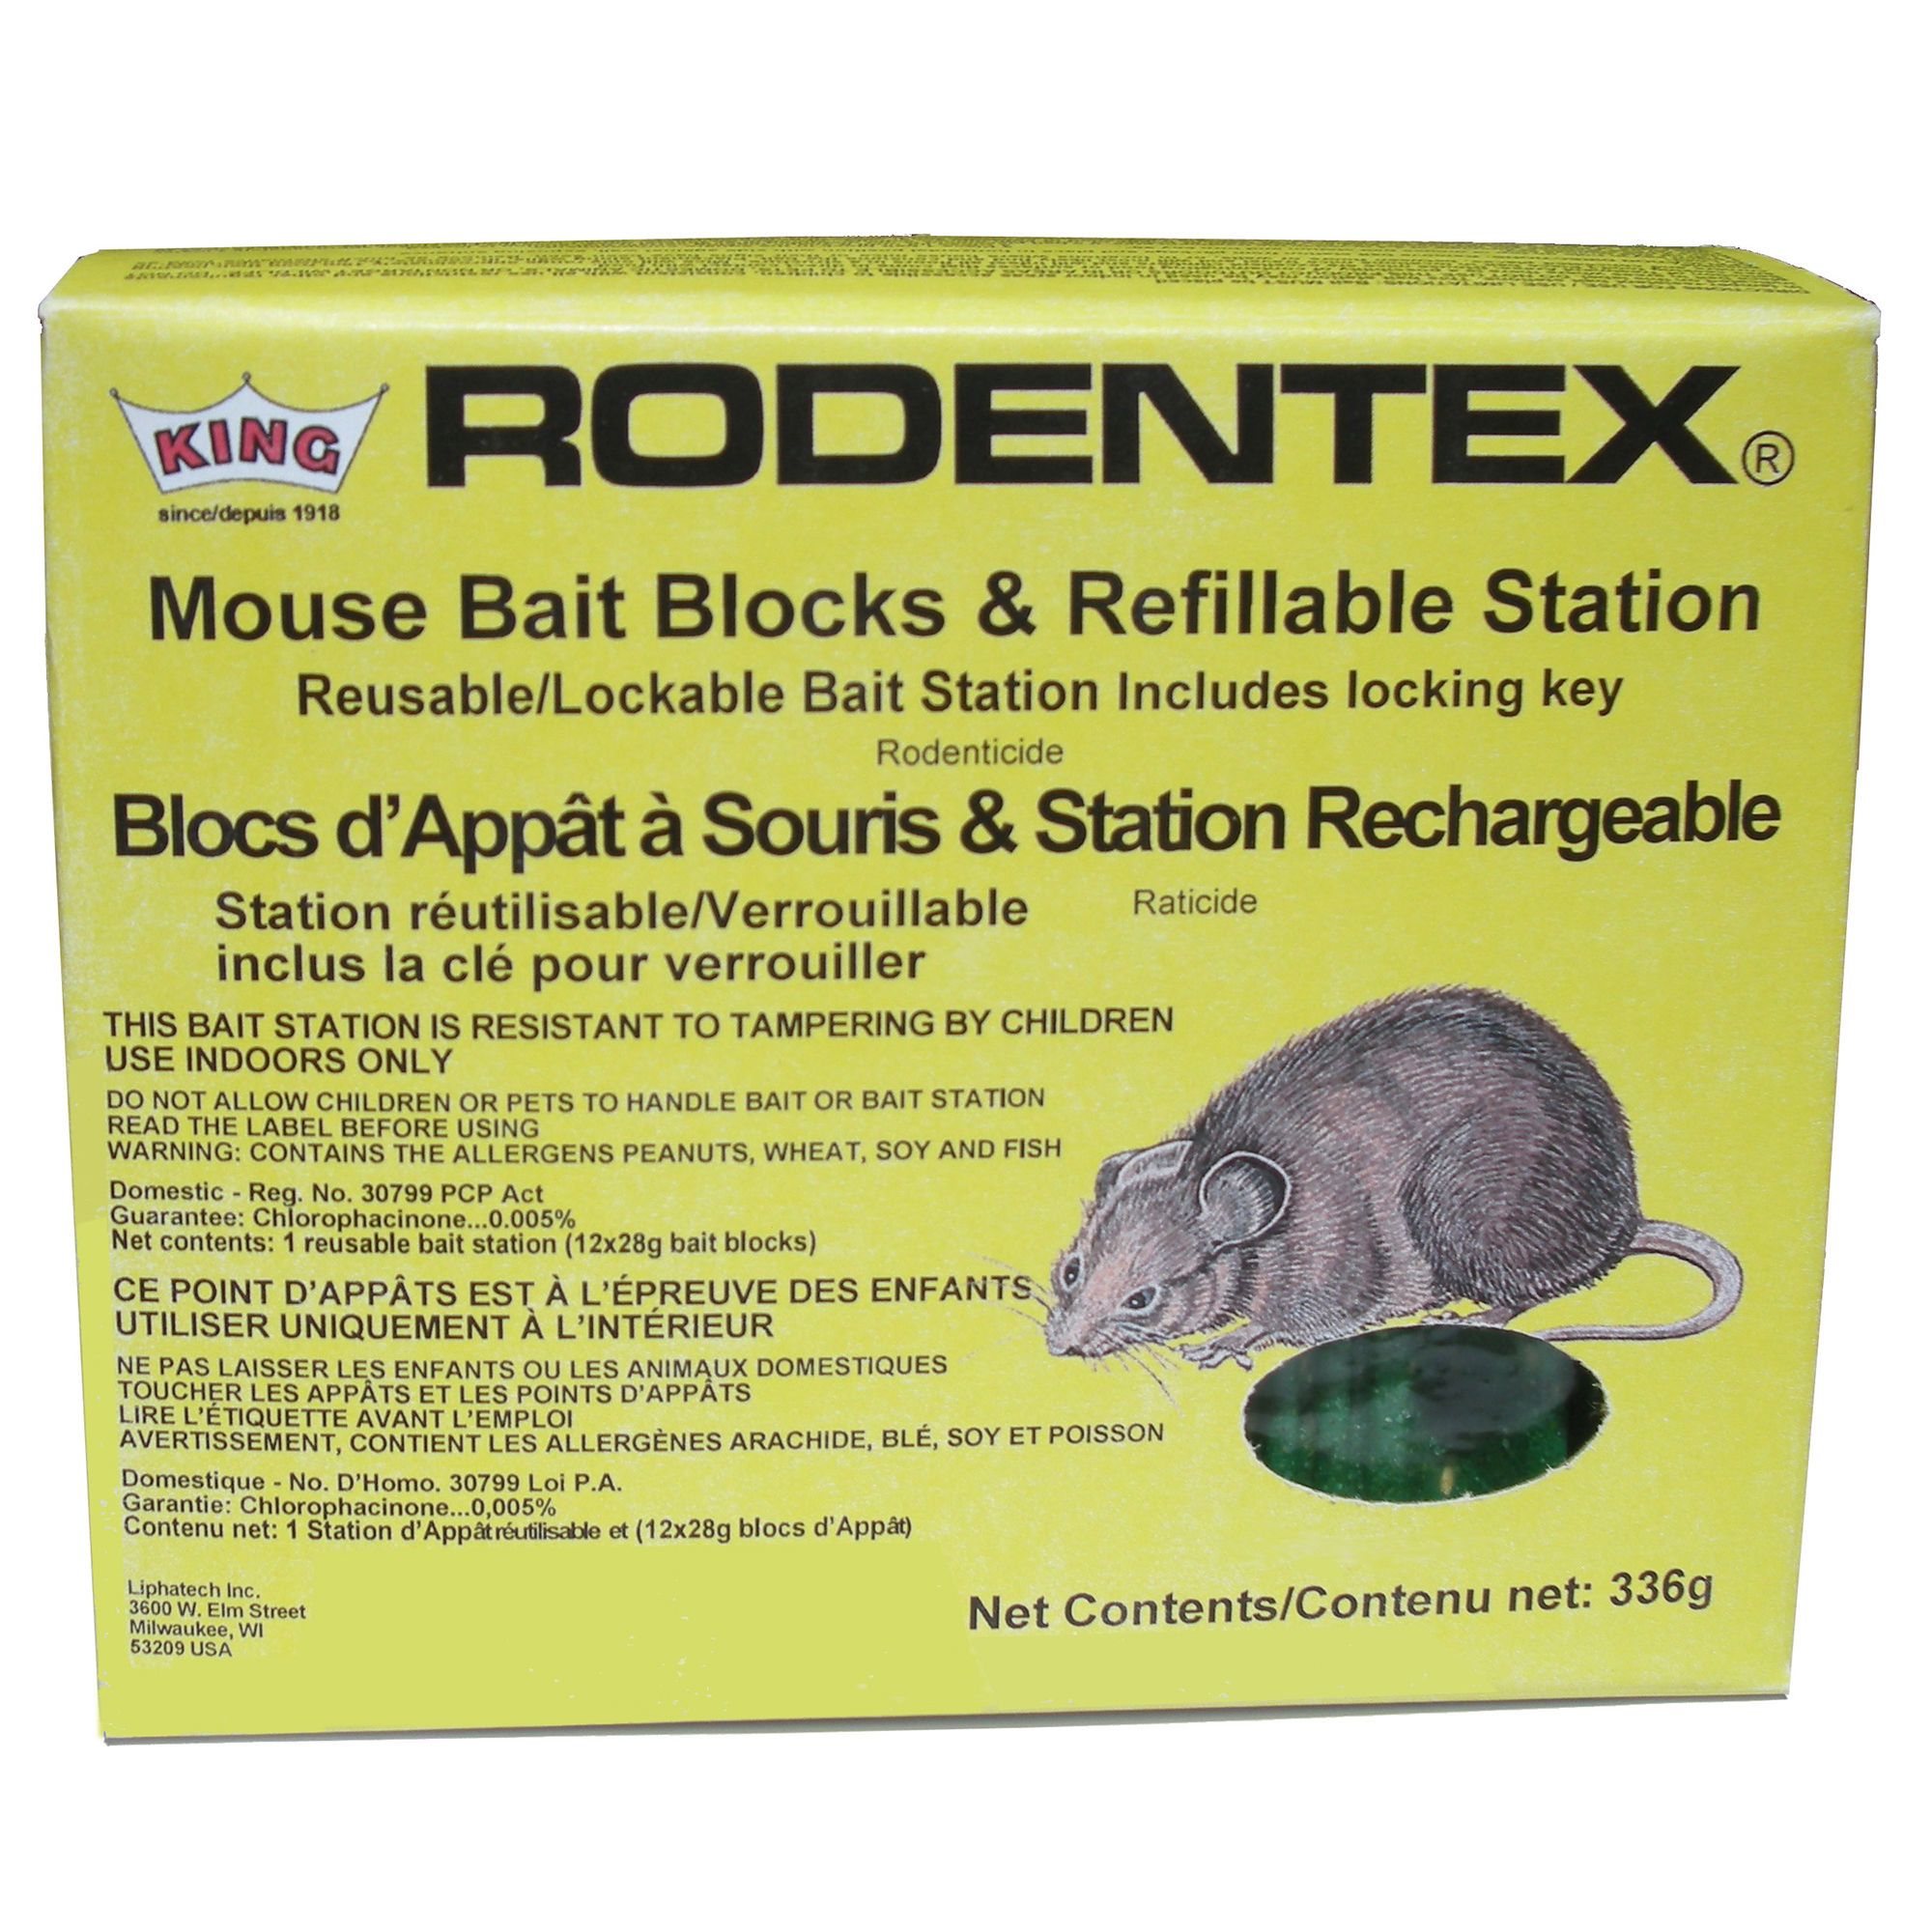 Mouse bait blocks & refillable station